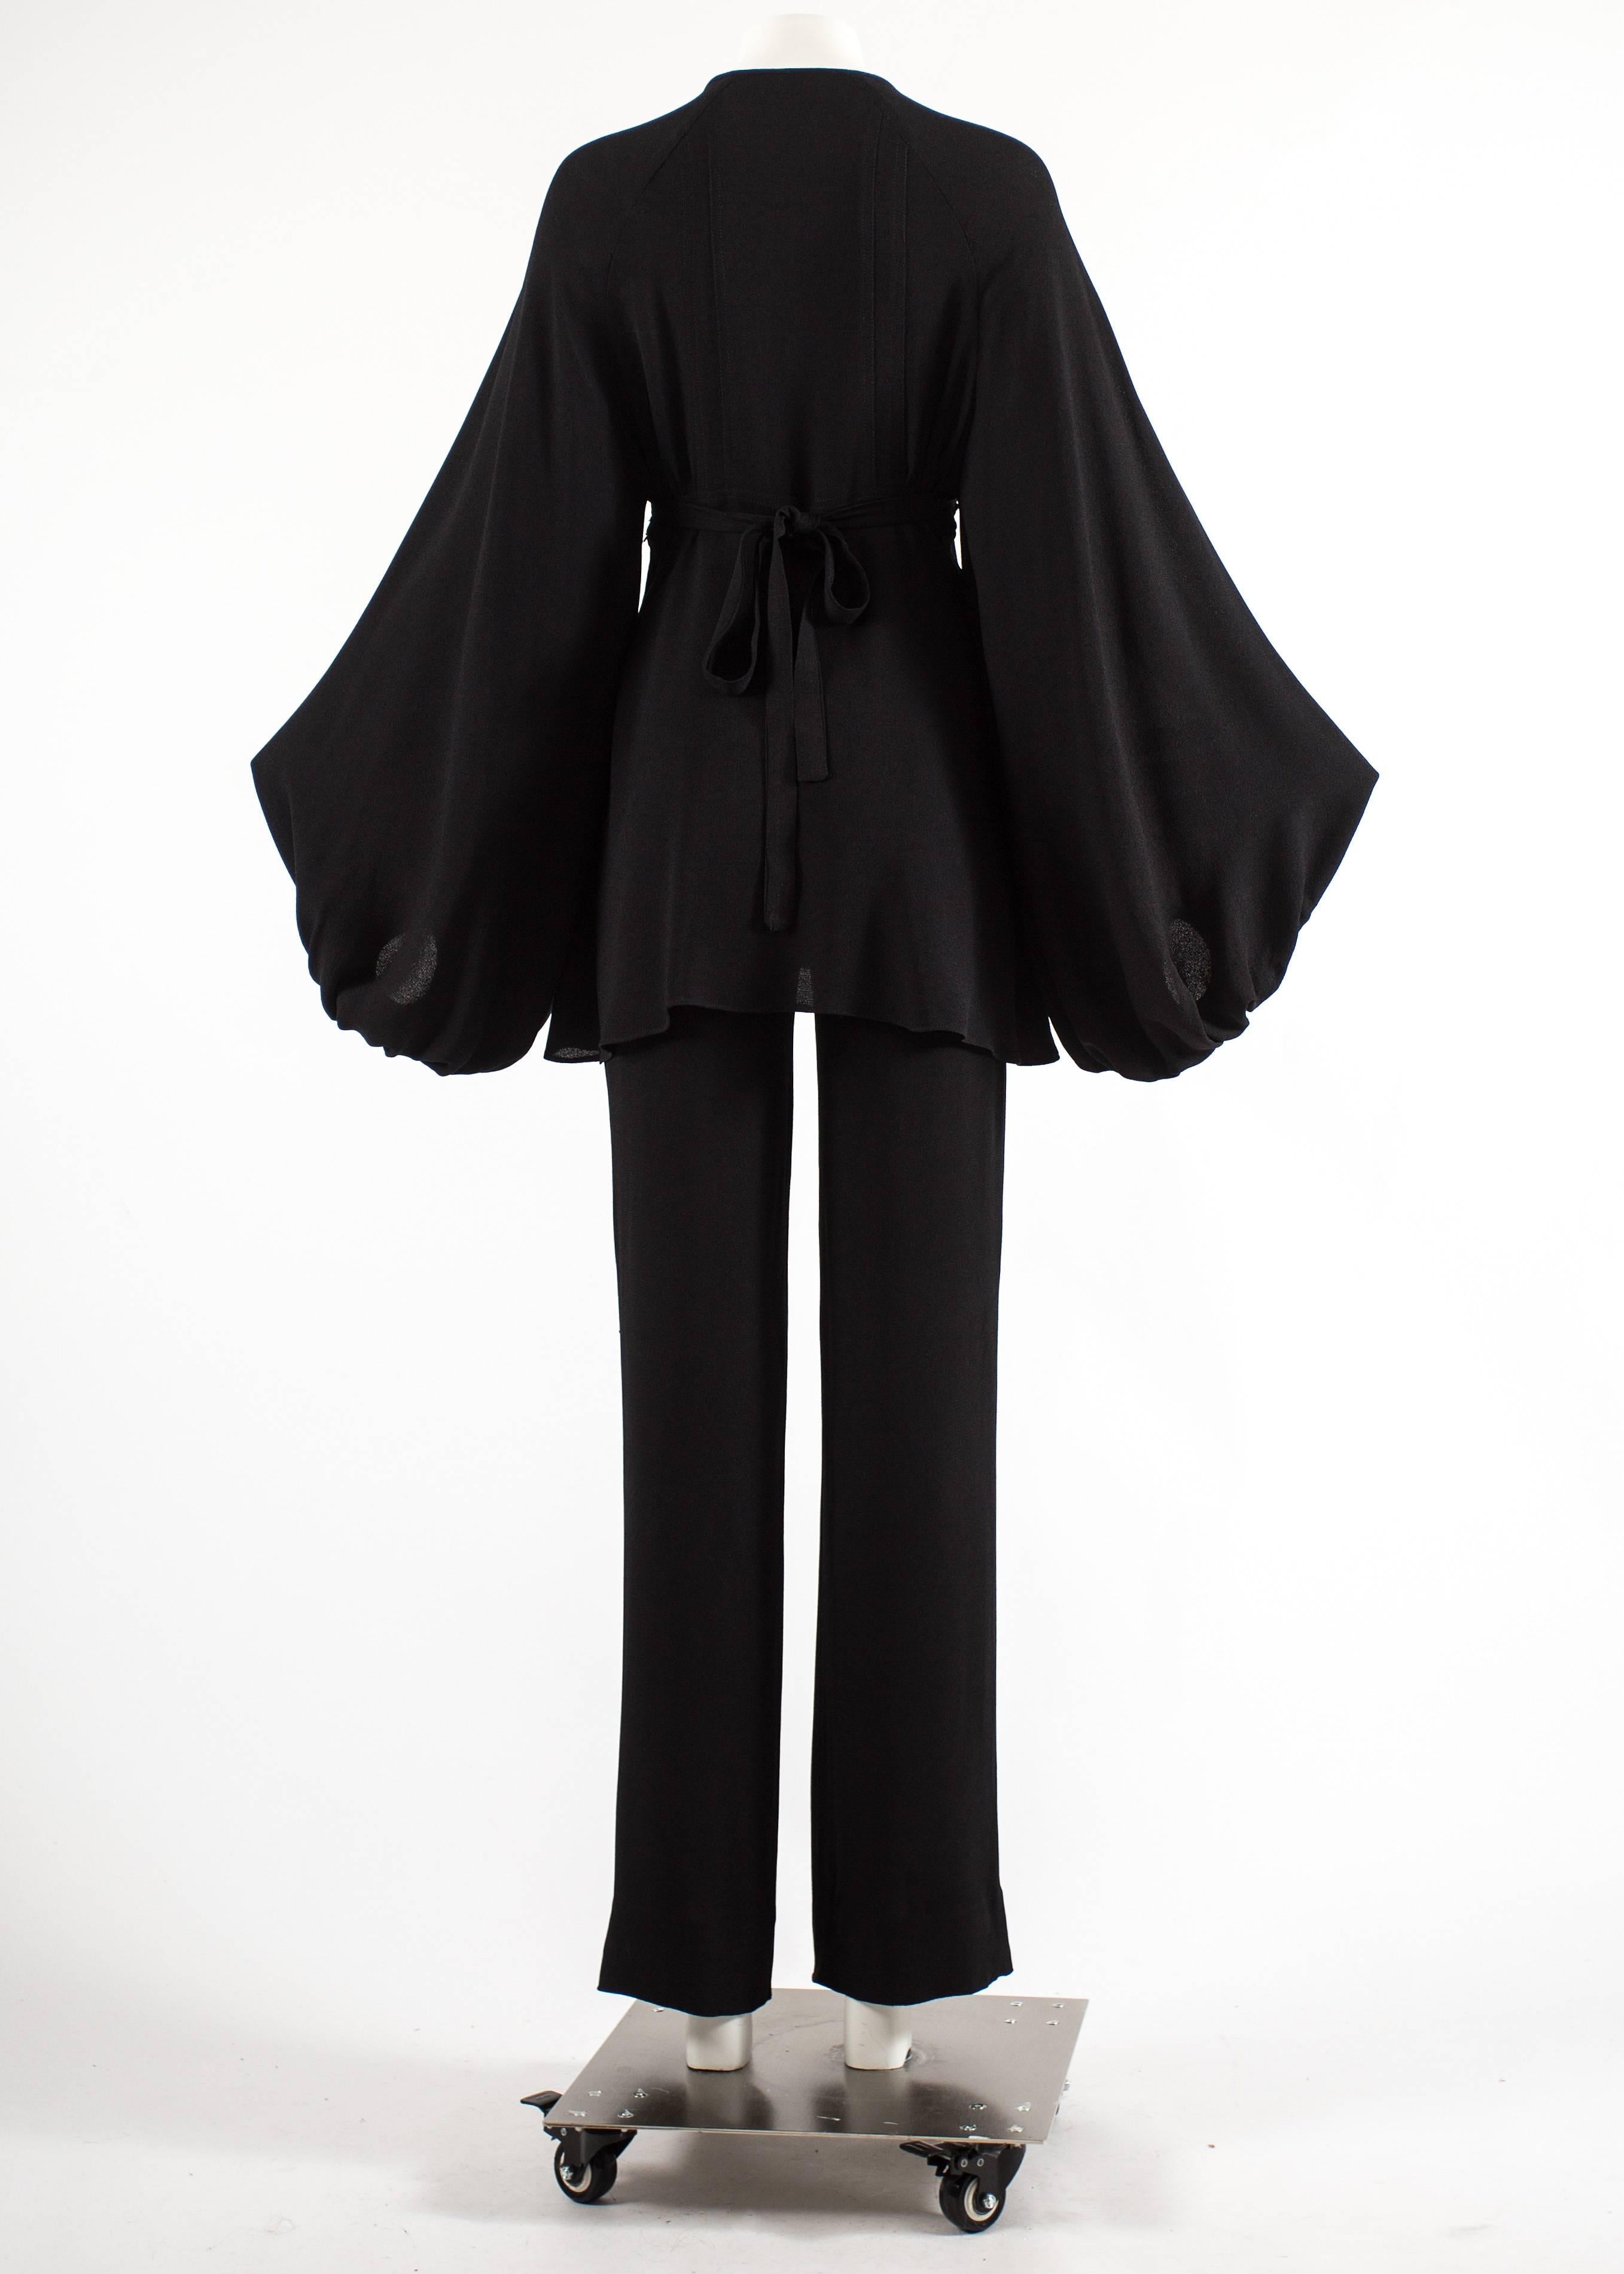 Women's Ossie Clark 1970 black moss crepe pant suit 